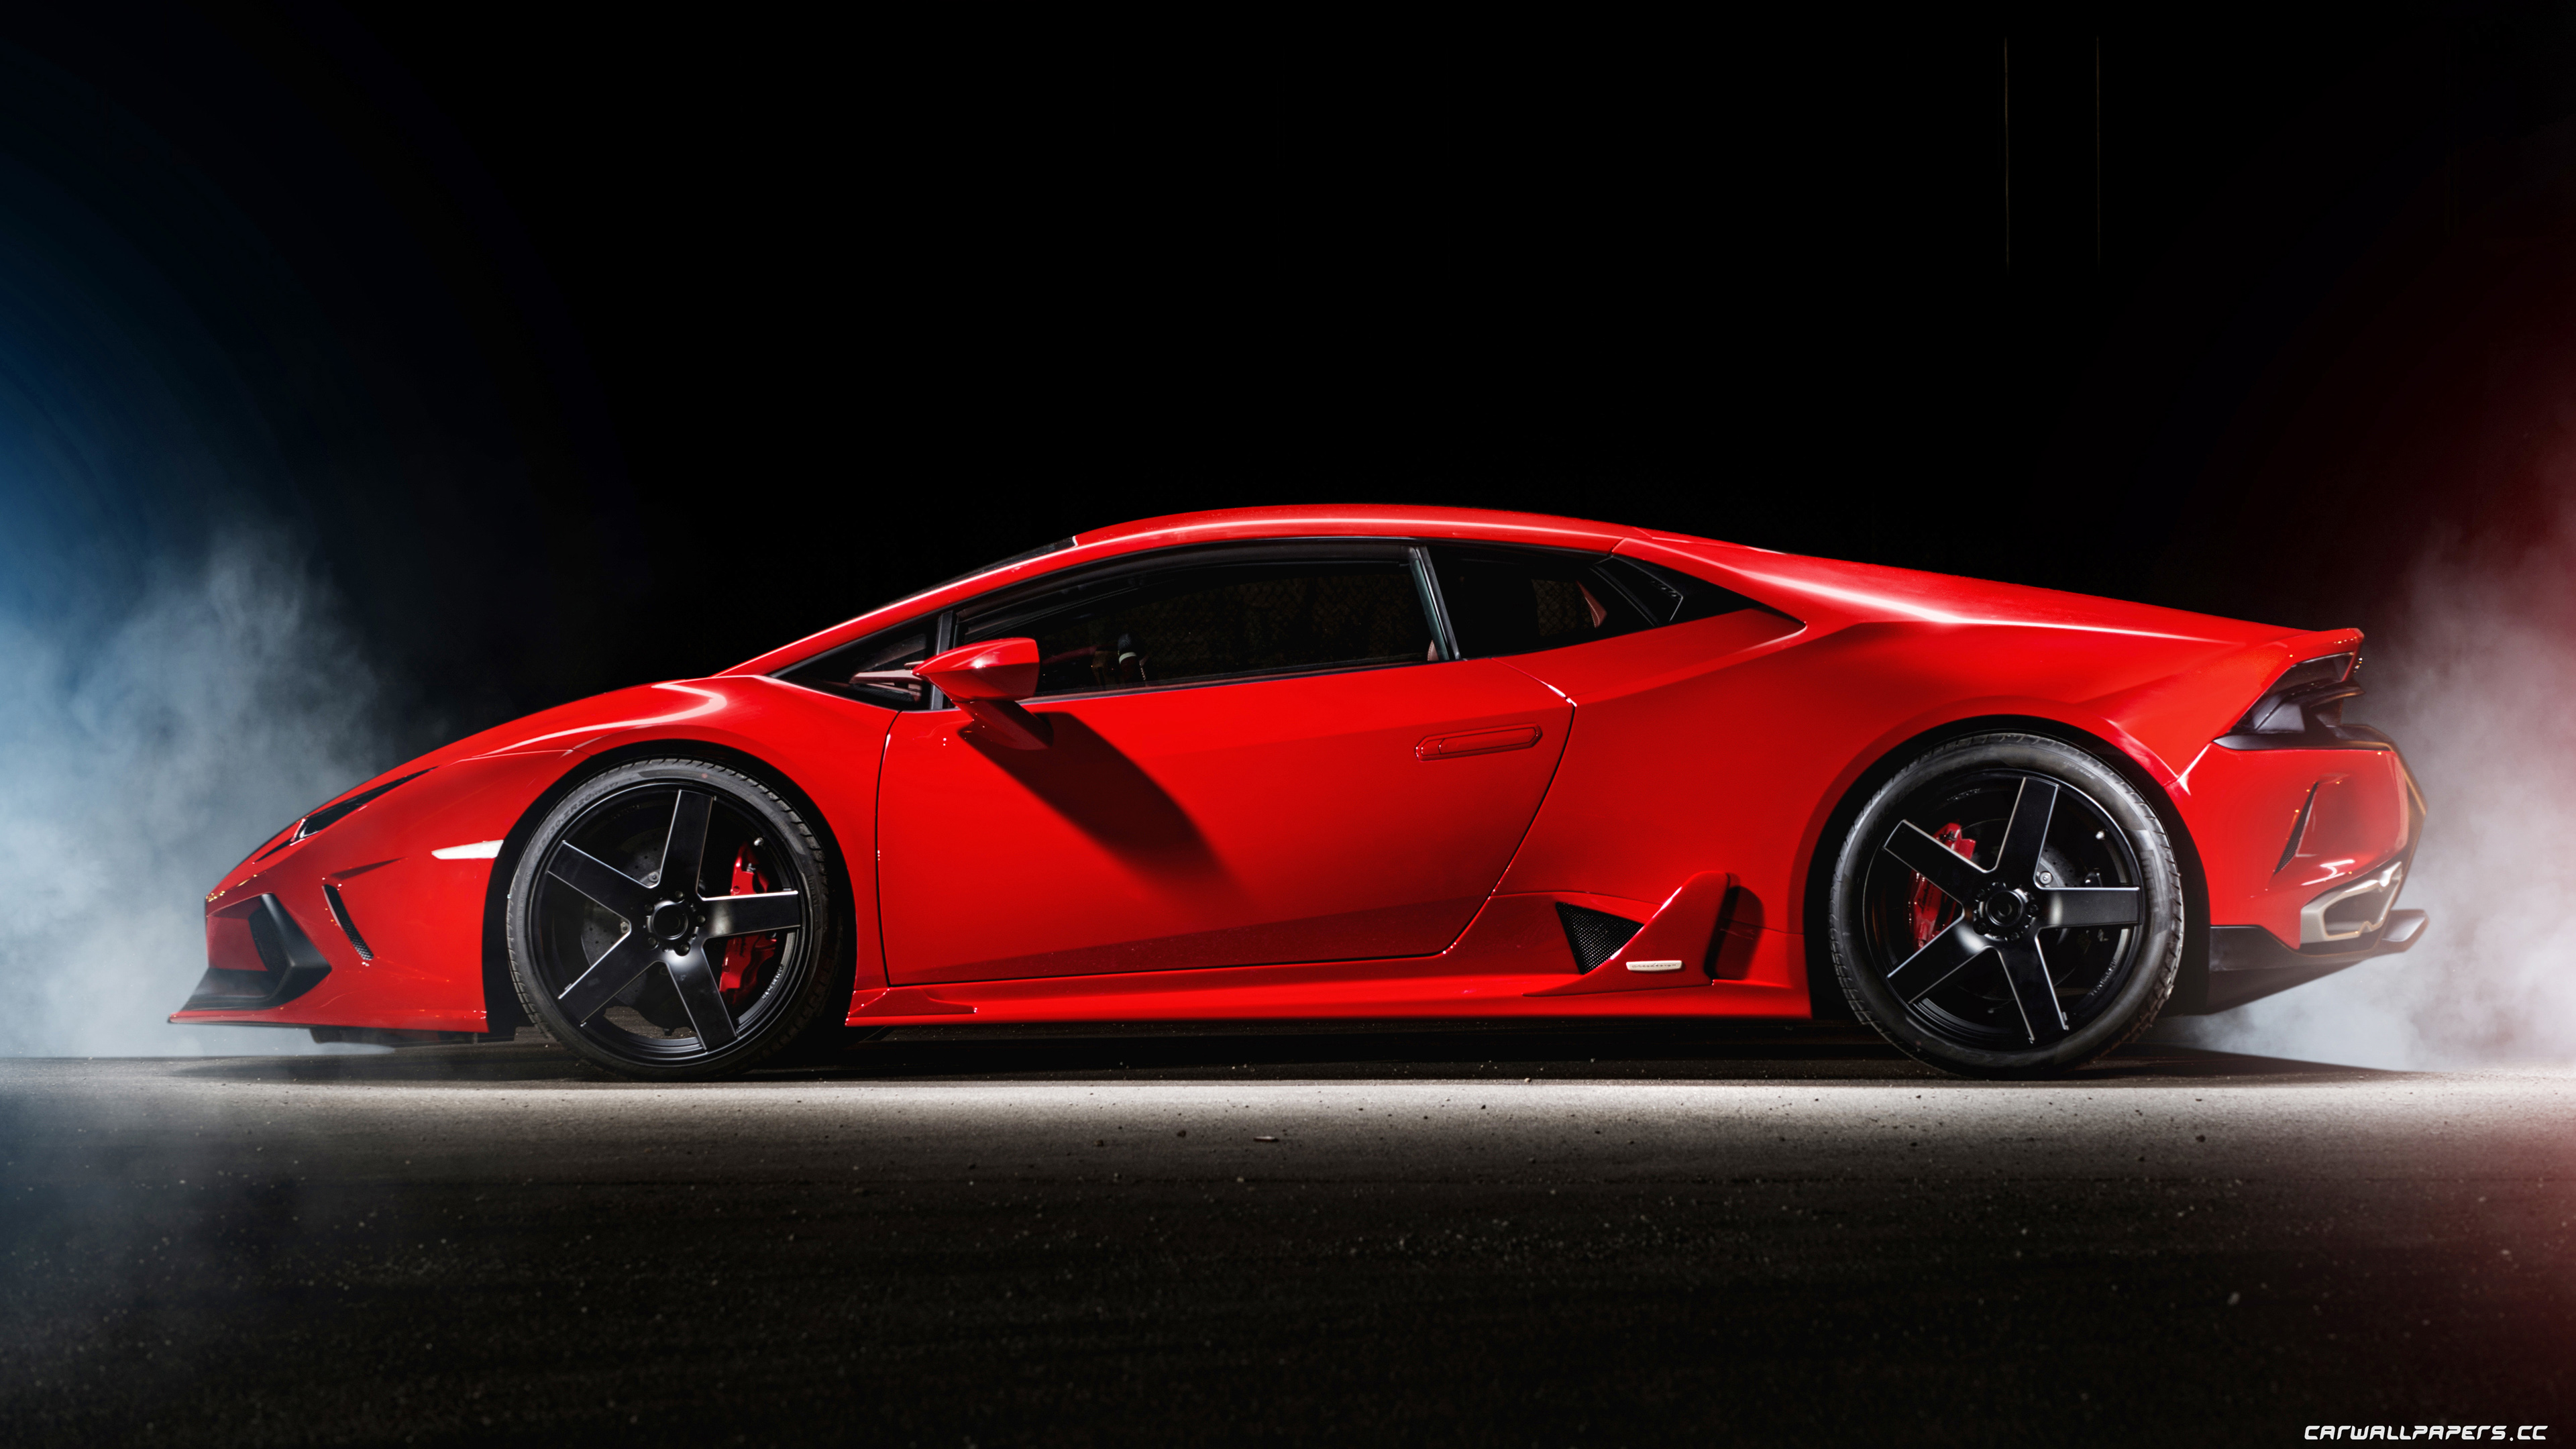 Baixe gratuitamente a imagem Lamborghini, Veículos, Lamborghini Huracán na área de trabalho do seu PC